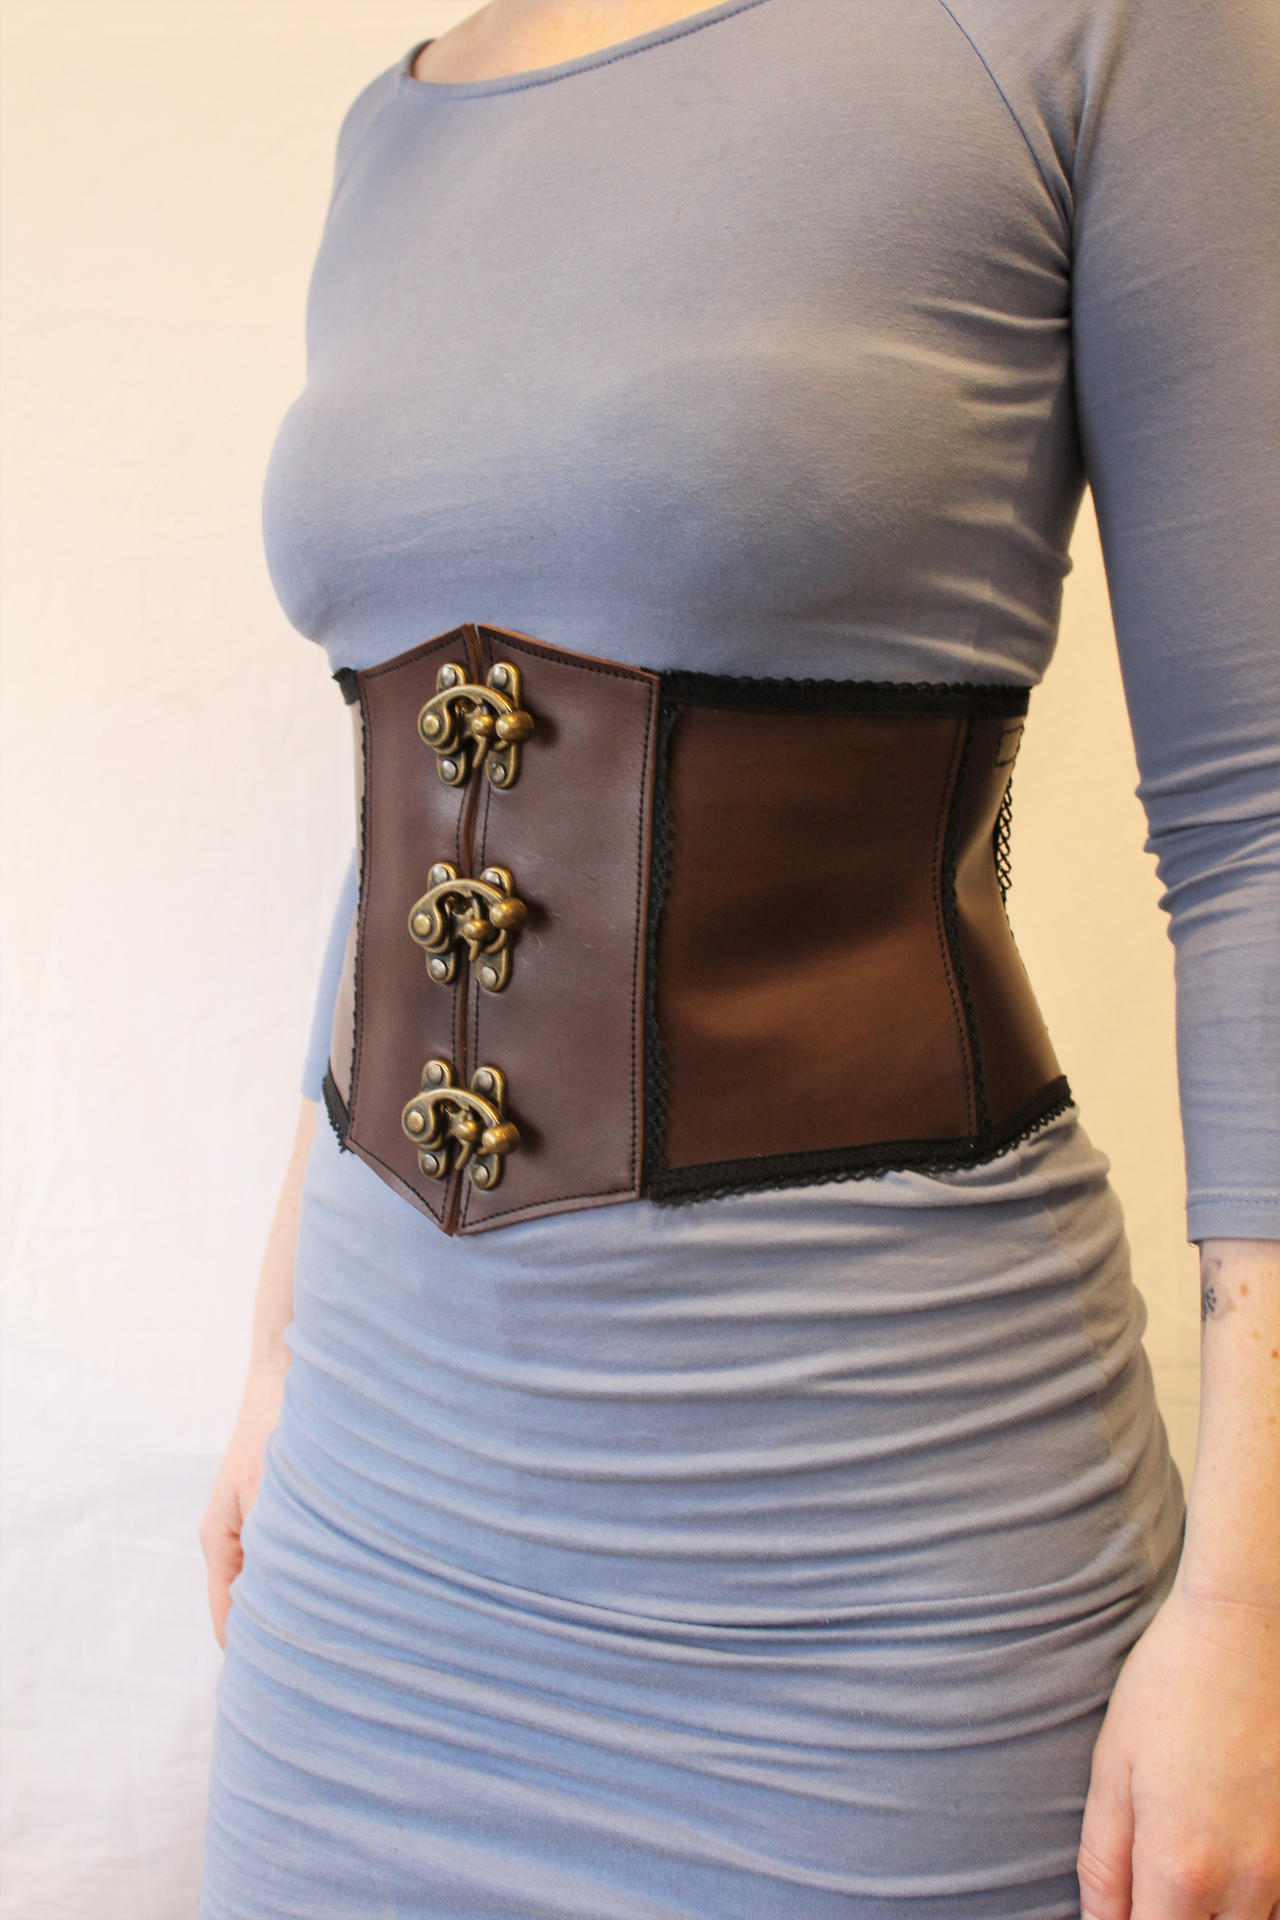 Brown corset belt with black lace by MARIEKECREATION on DeviantArt